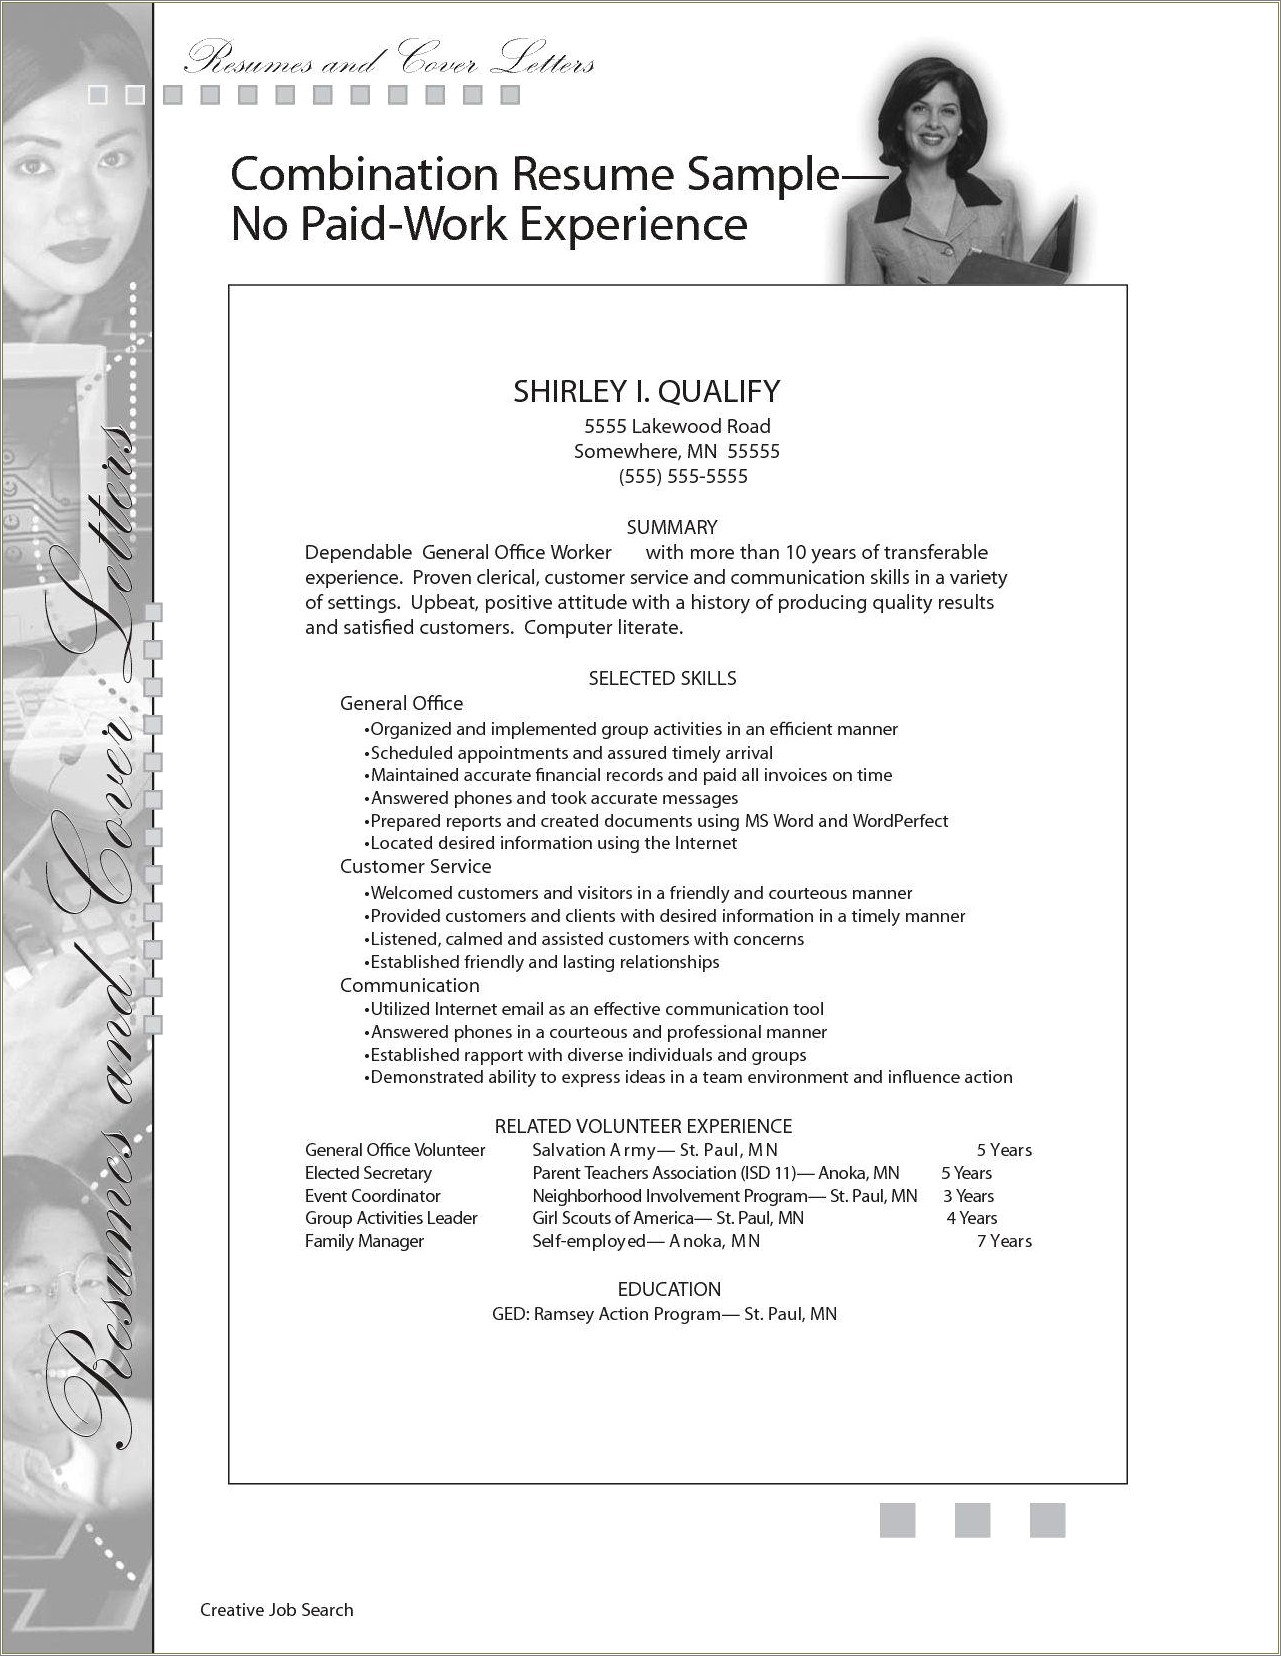 Resume With No Work Experience No Volunteer